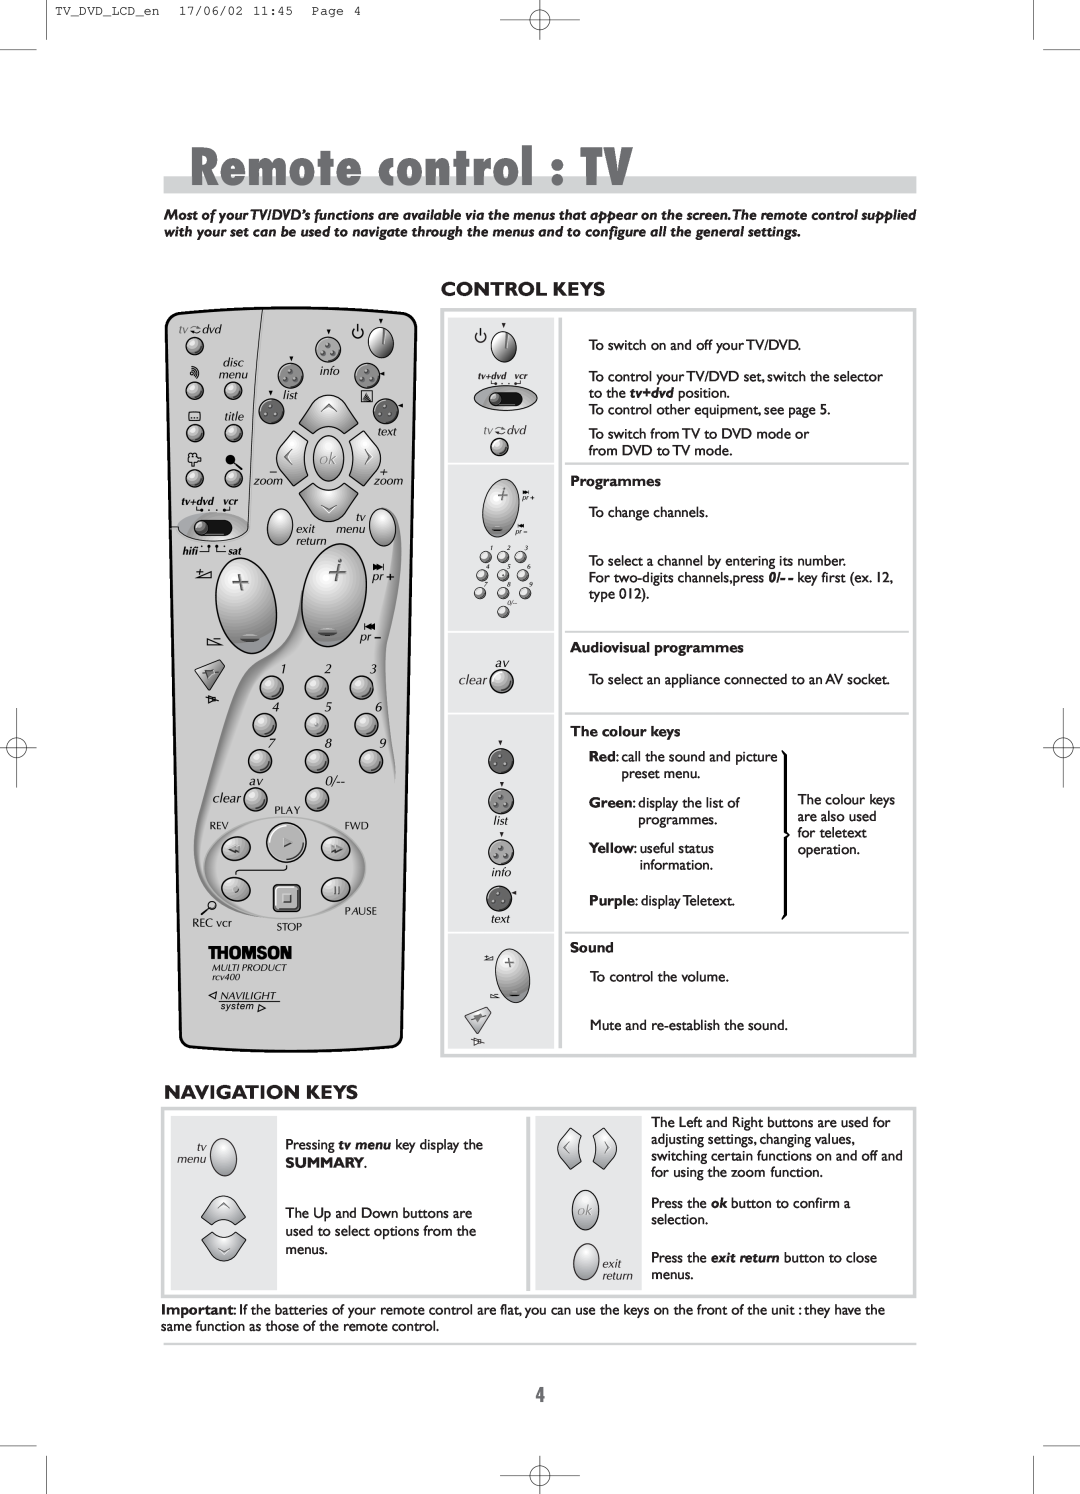 Technicolor - Thomson TV/DVD Combo Remote control TV, Control Keys, Navigation Keys, Programmes, Audiovisual programmes 